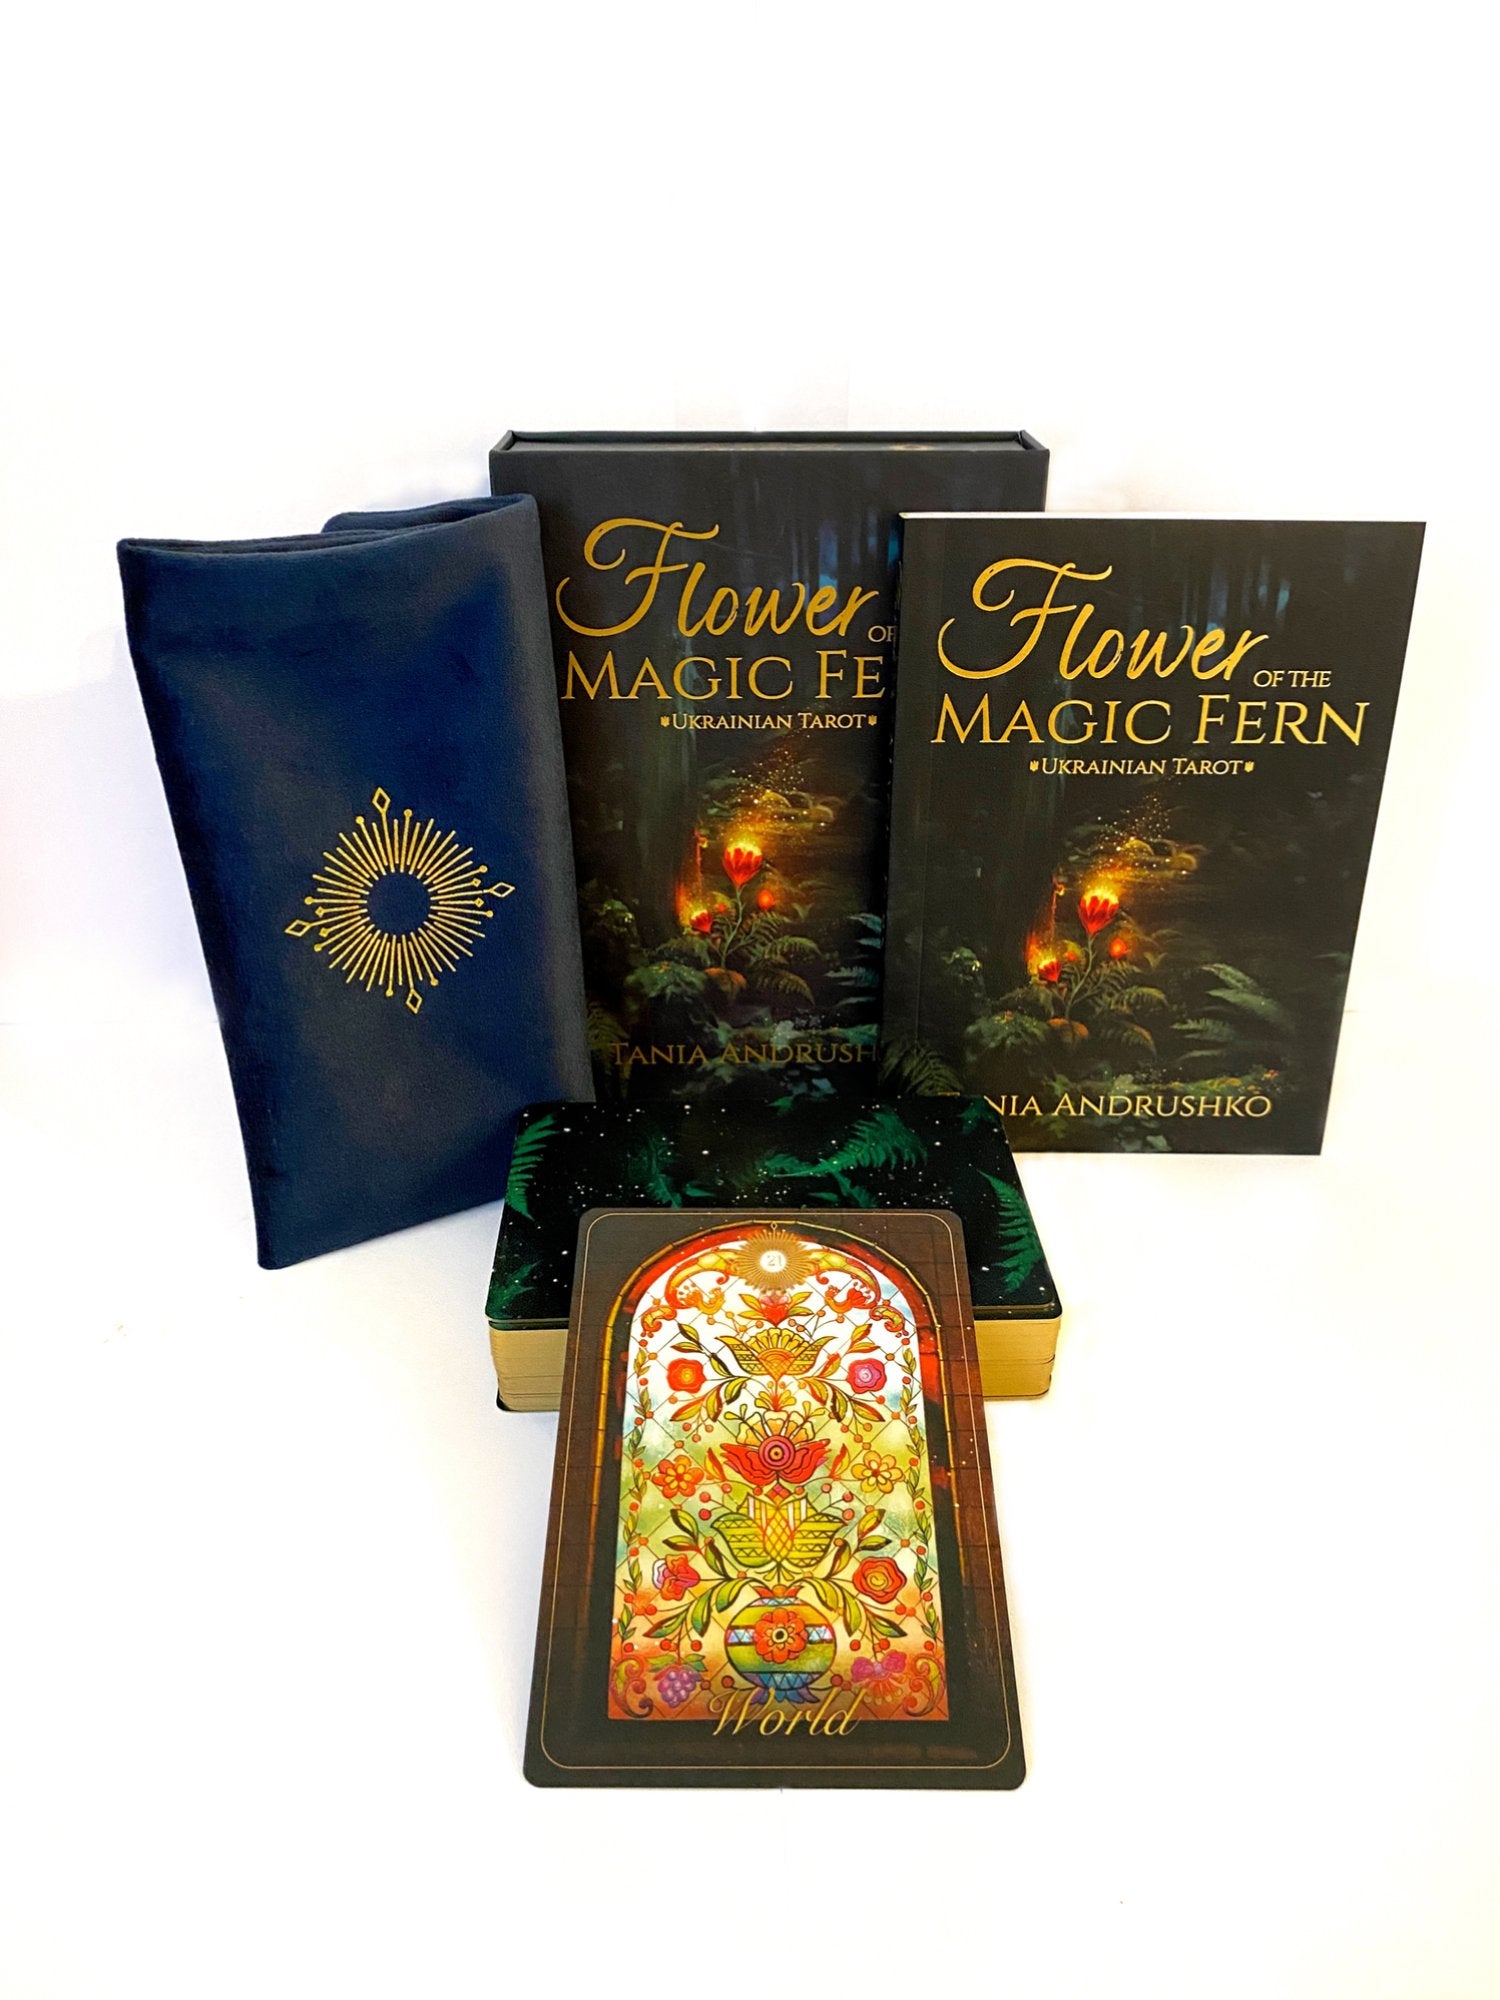 Flower of the Magic Fern - Ukrainian Tarot